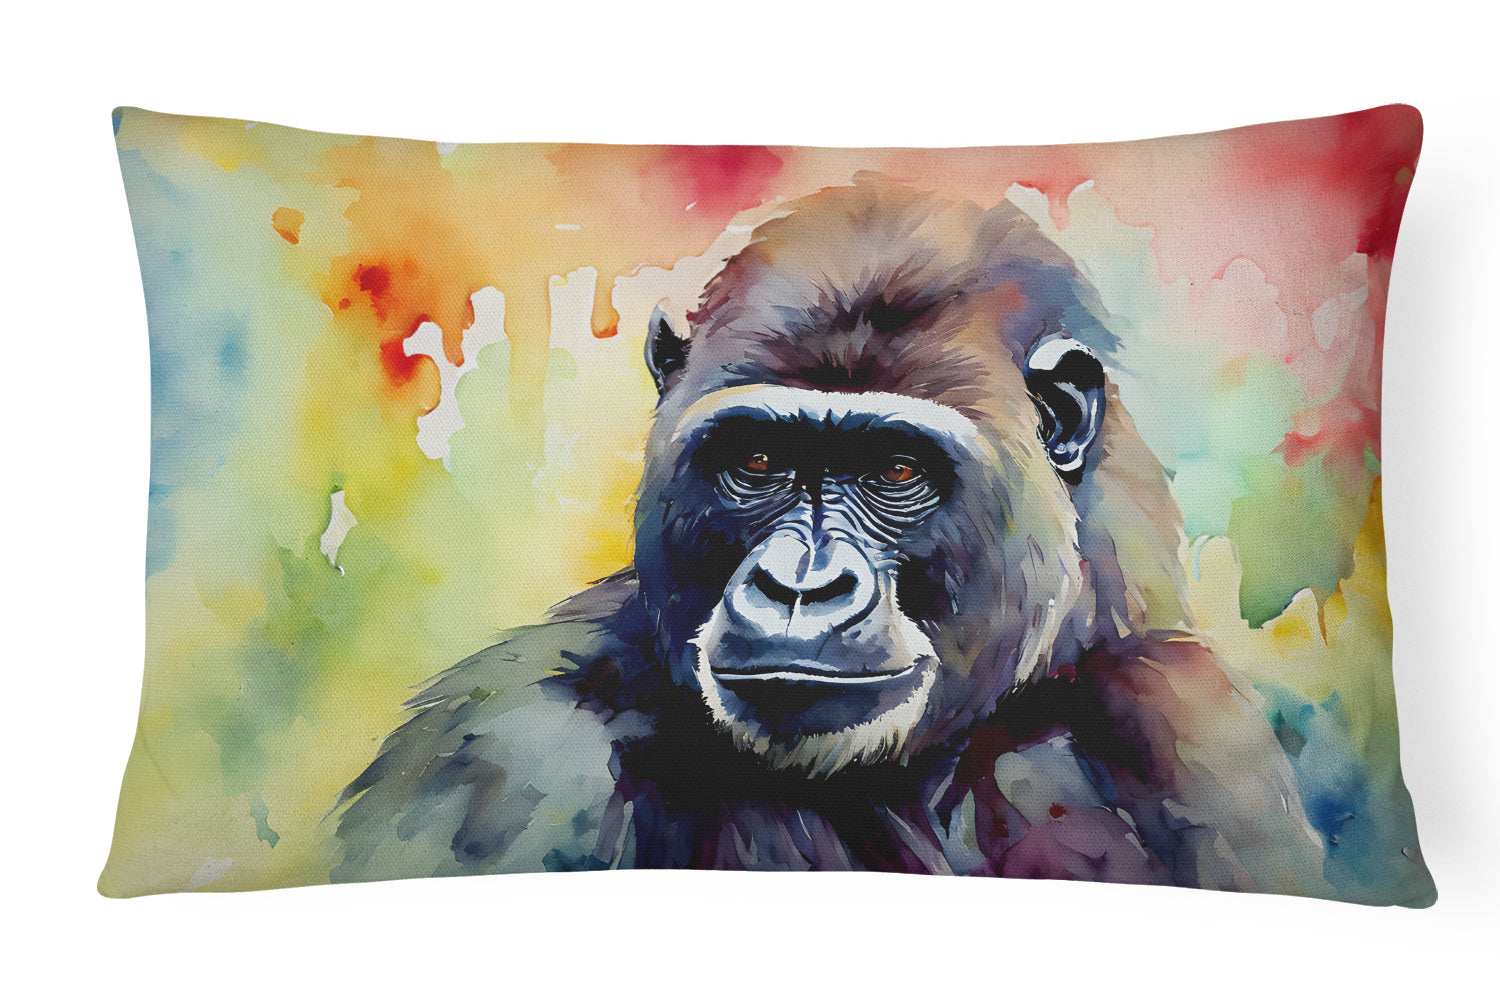 Buy this Gorilla Throw Pillow